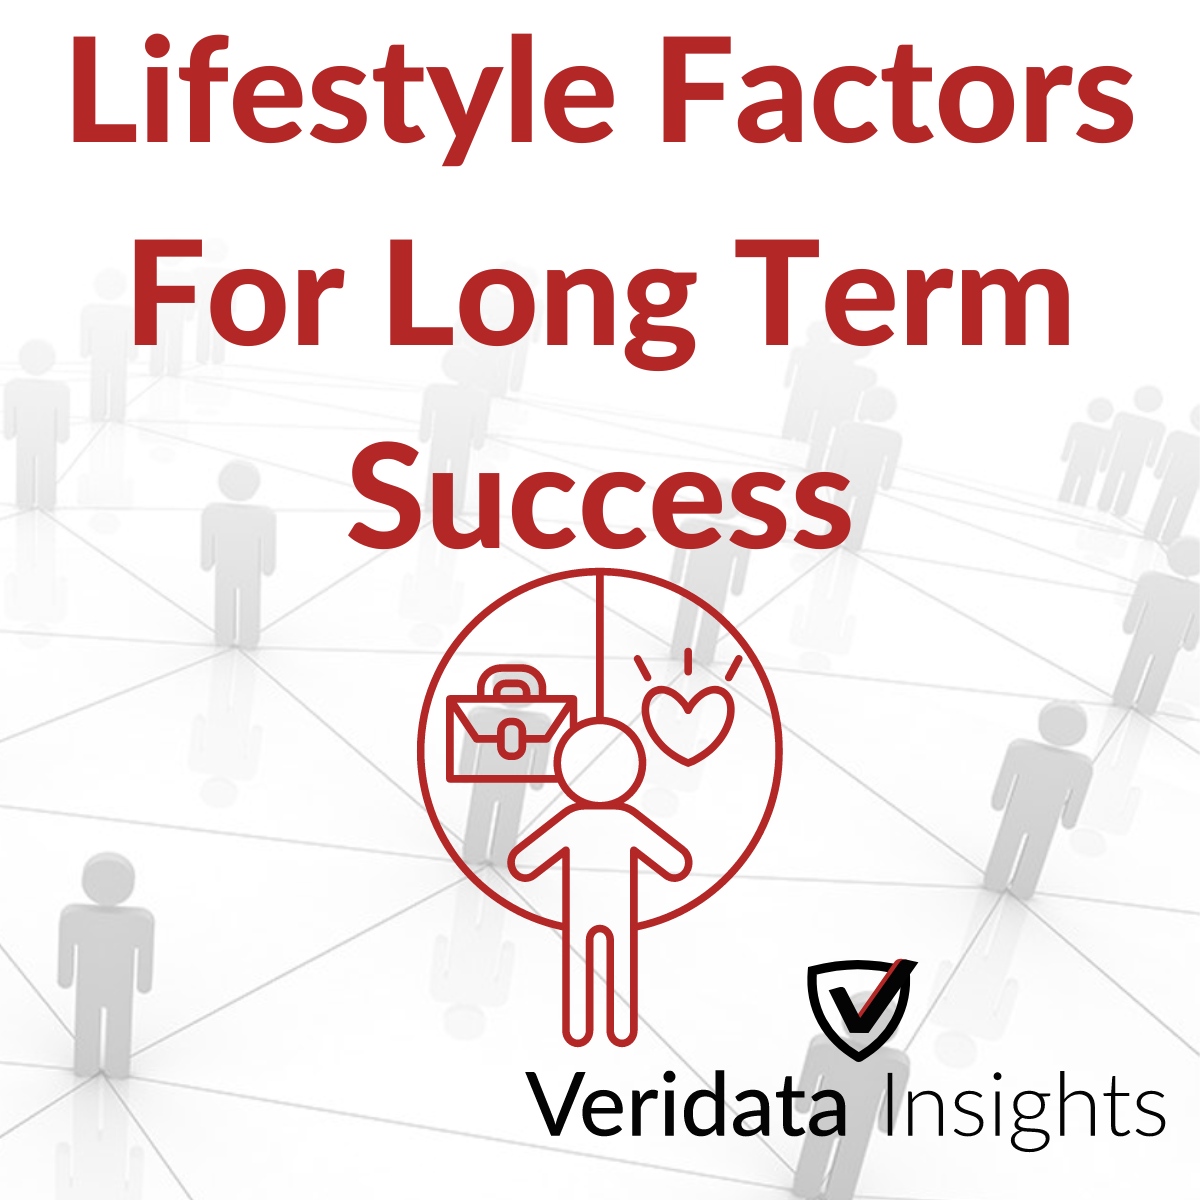 Veridata Insights explores lifestyle factors for long term success